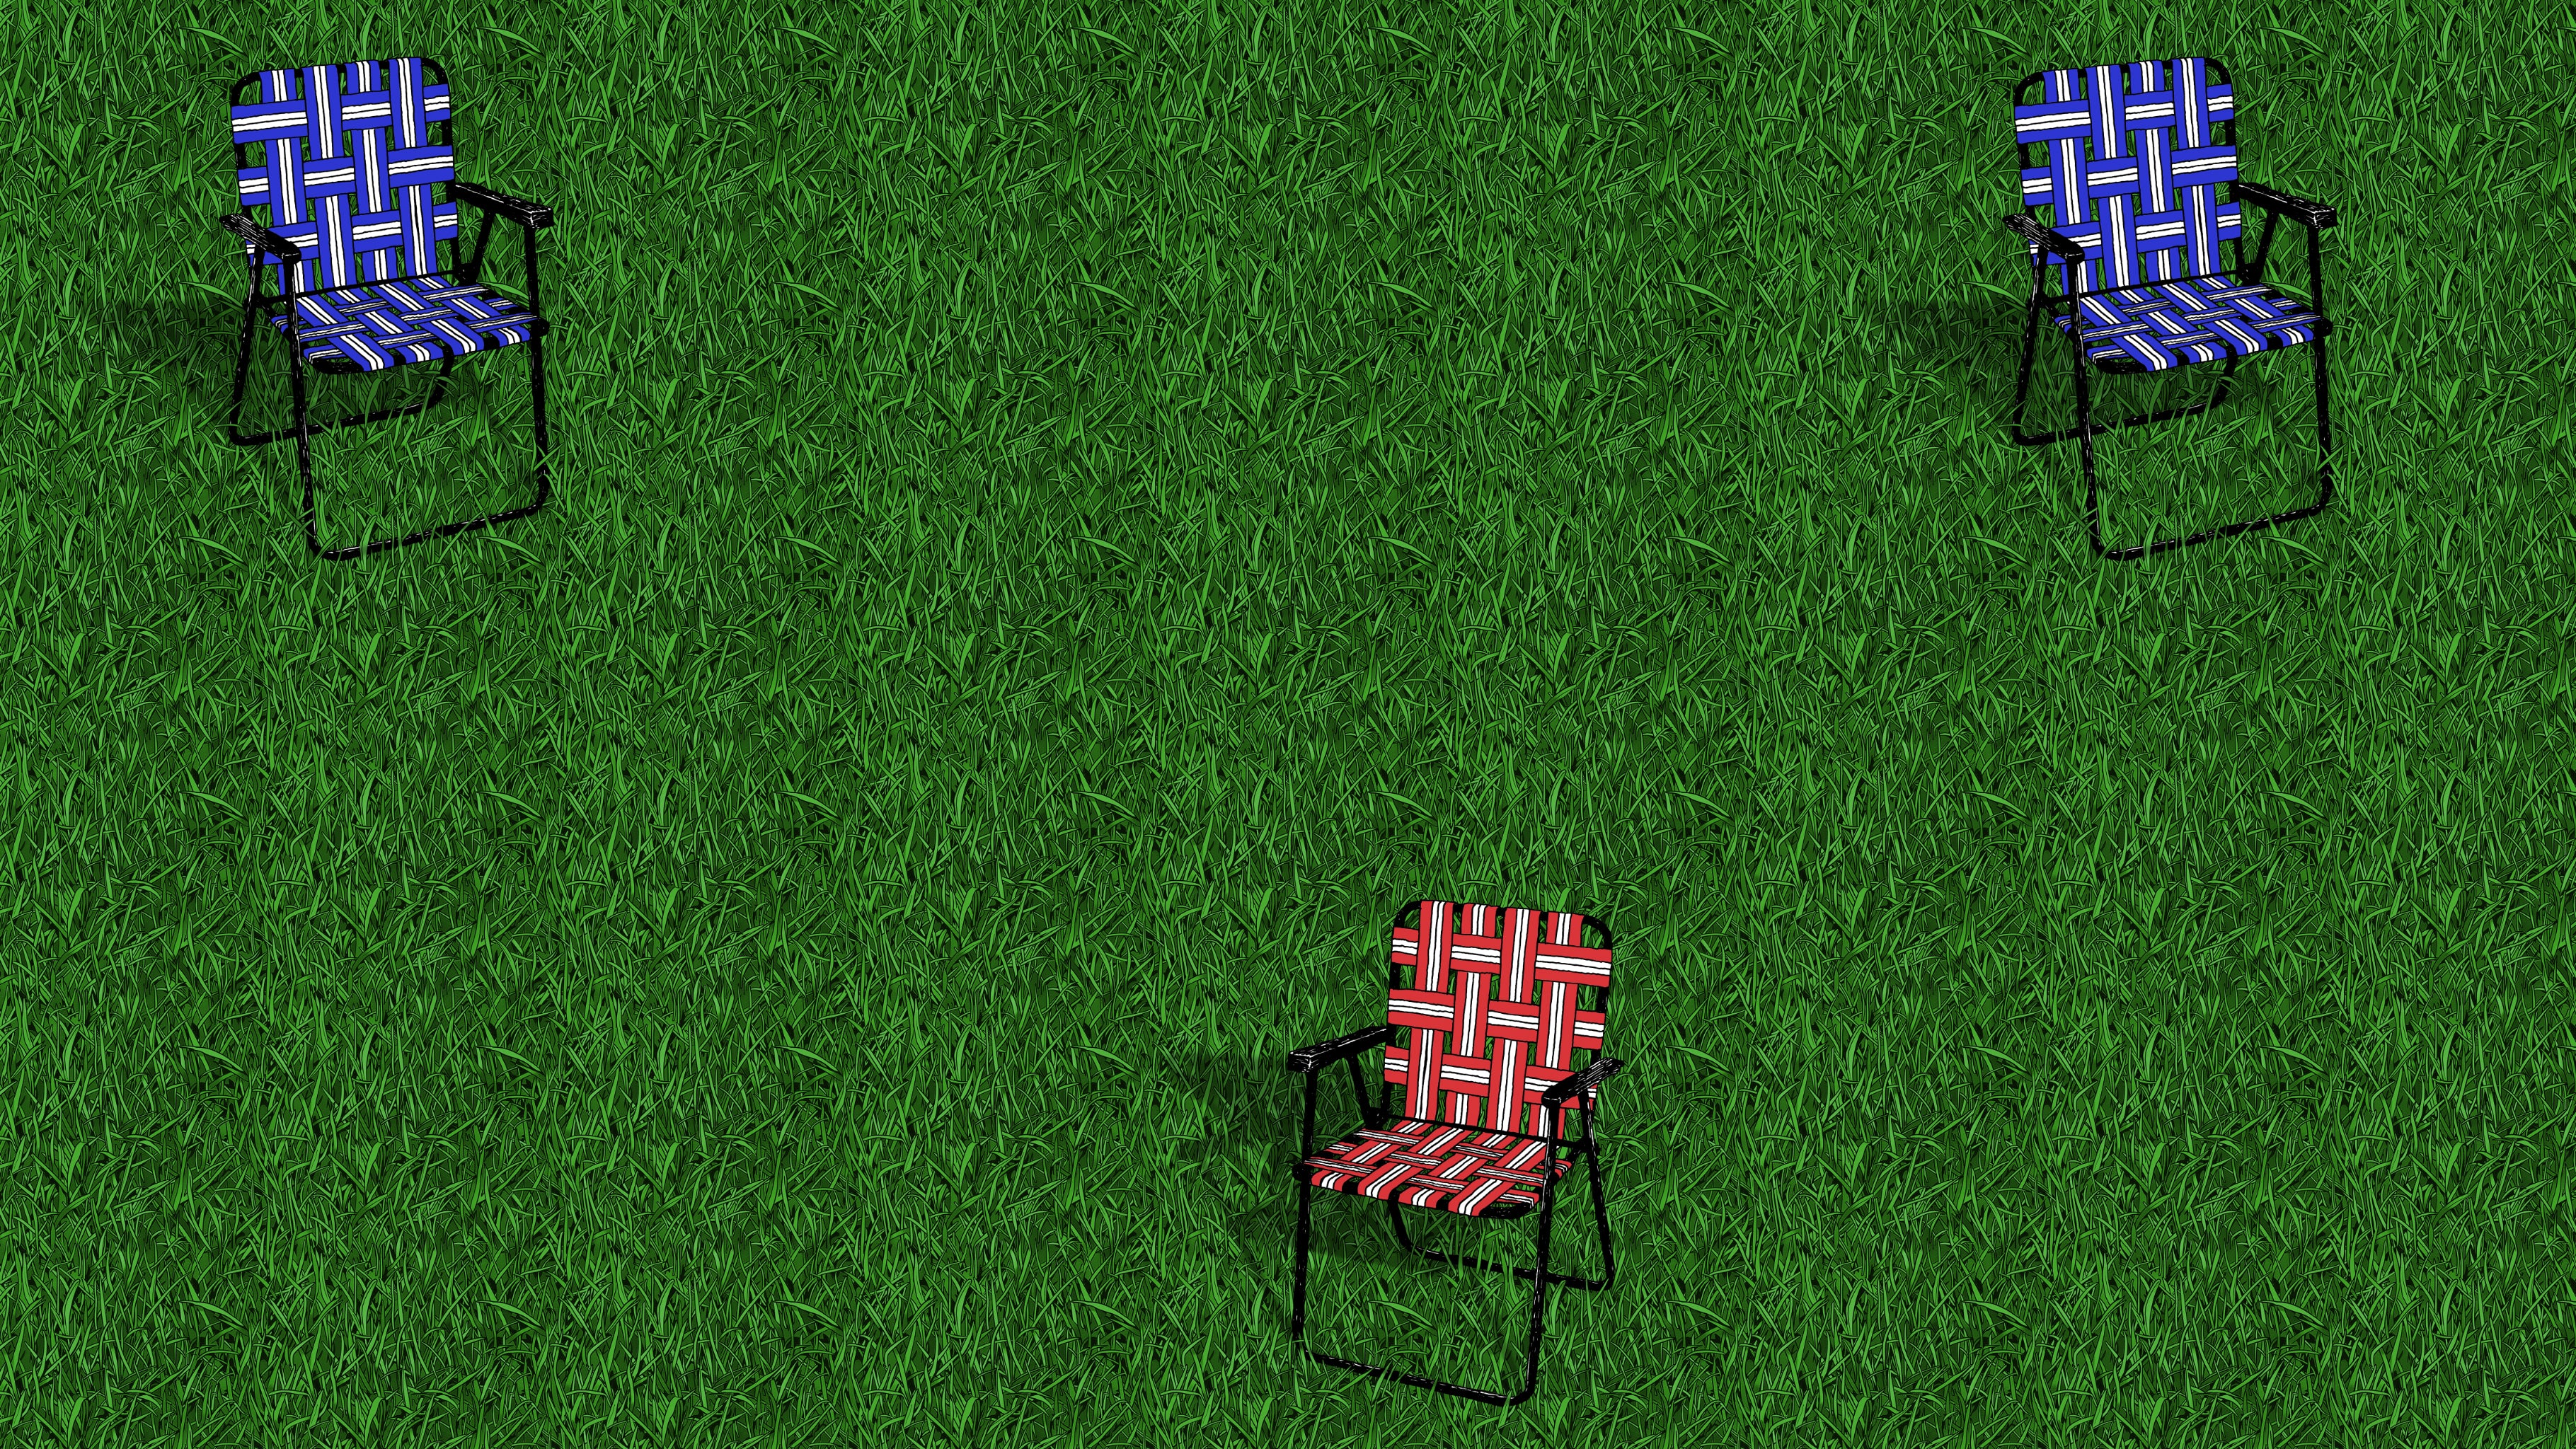 Lawn Chairs by Studio Ten Design